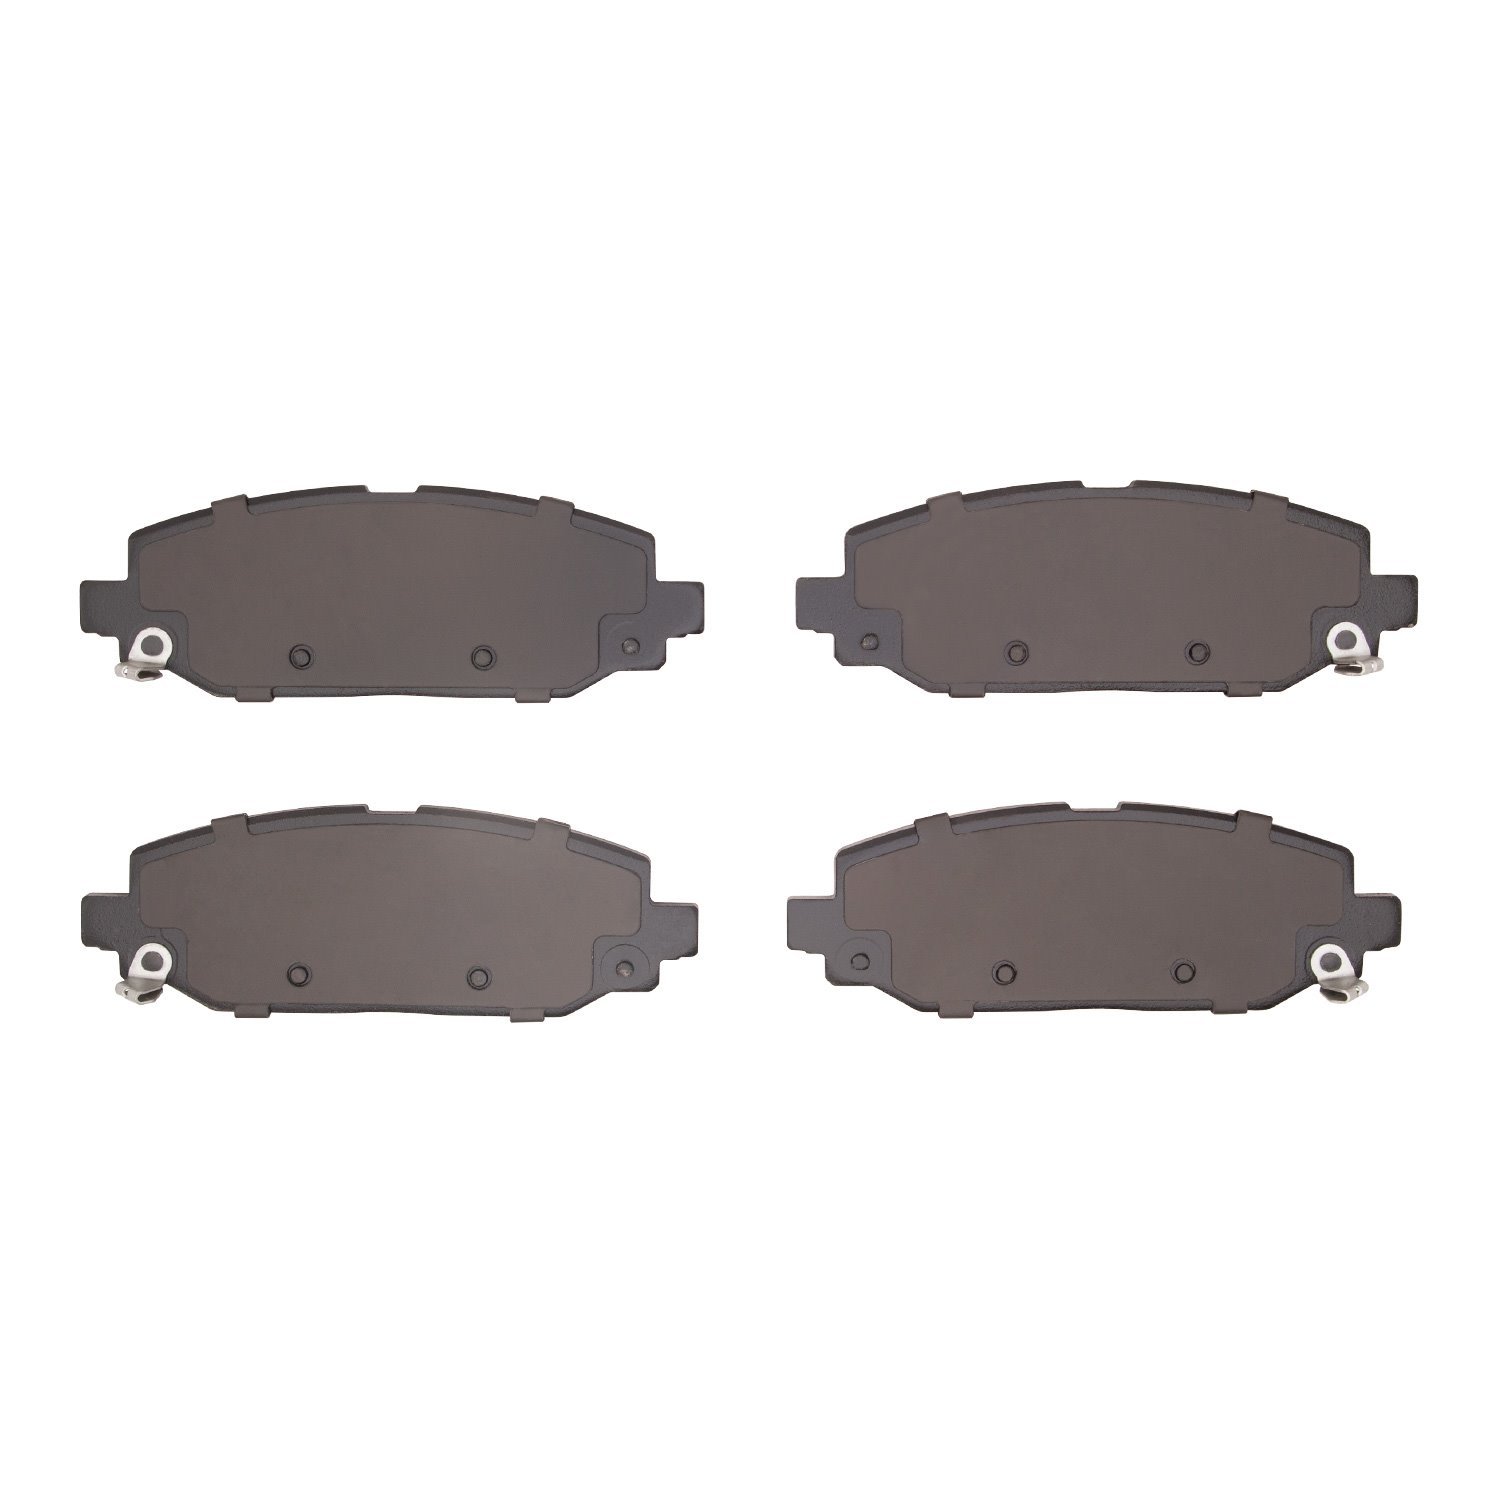 1551-2186-00 5000 Advanced Ceramic Brake Pads, Fits Select Mopar, Position: Rear